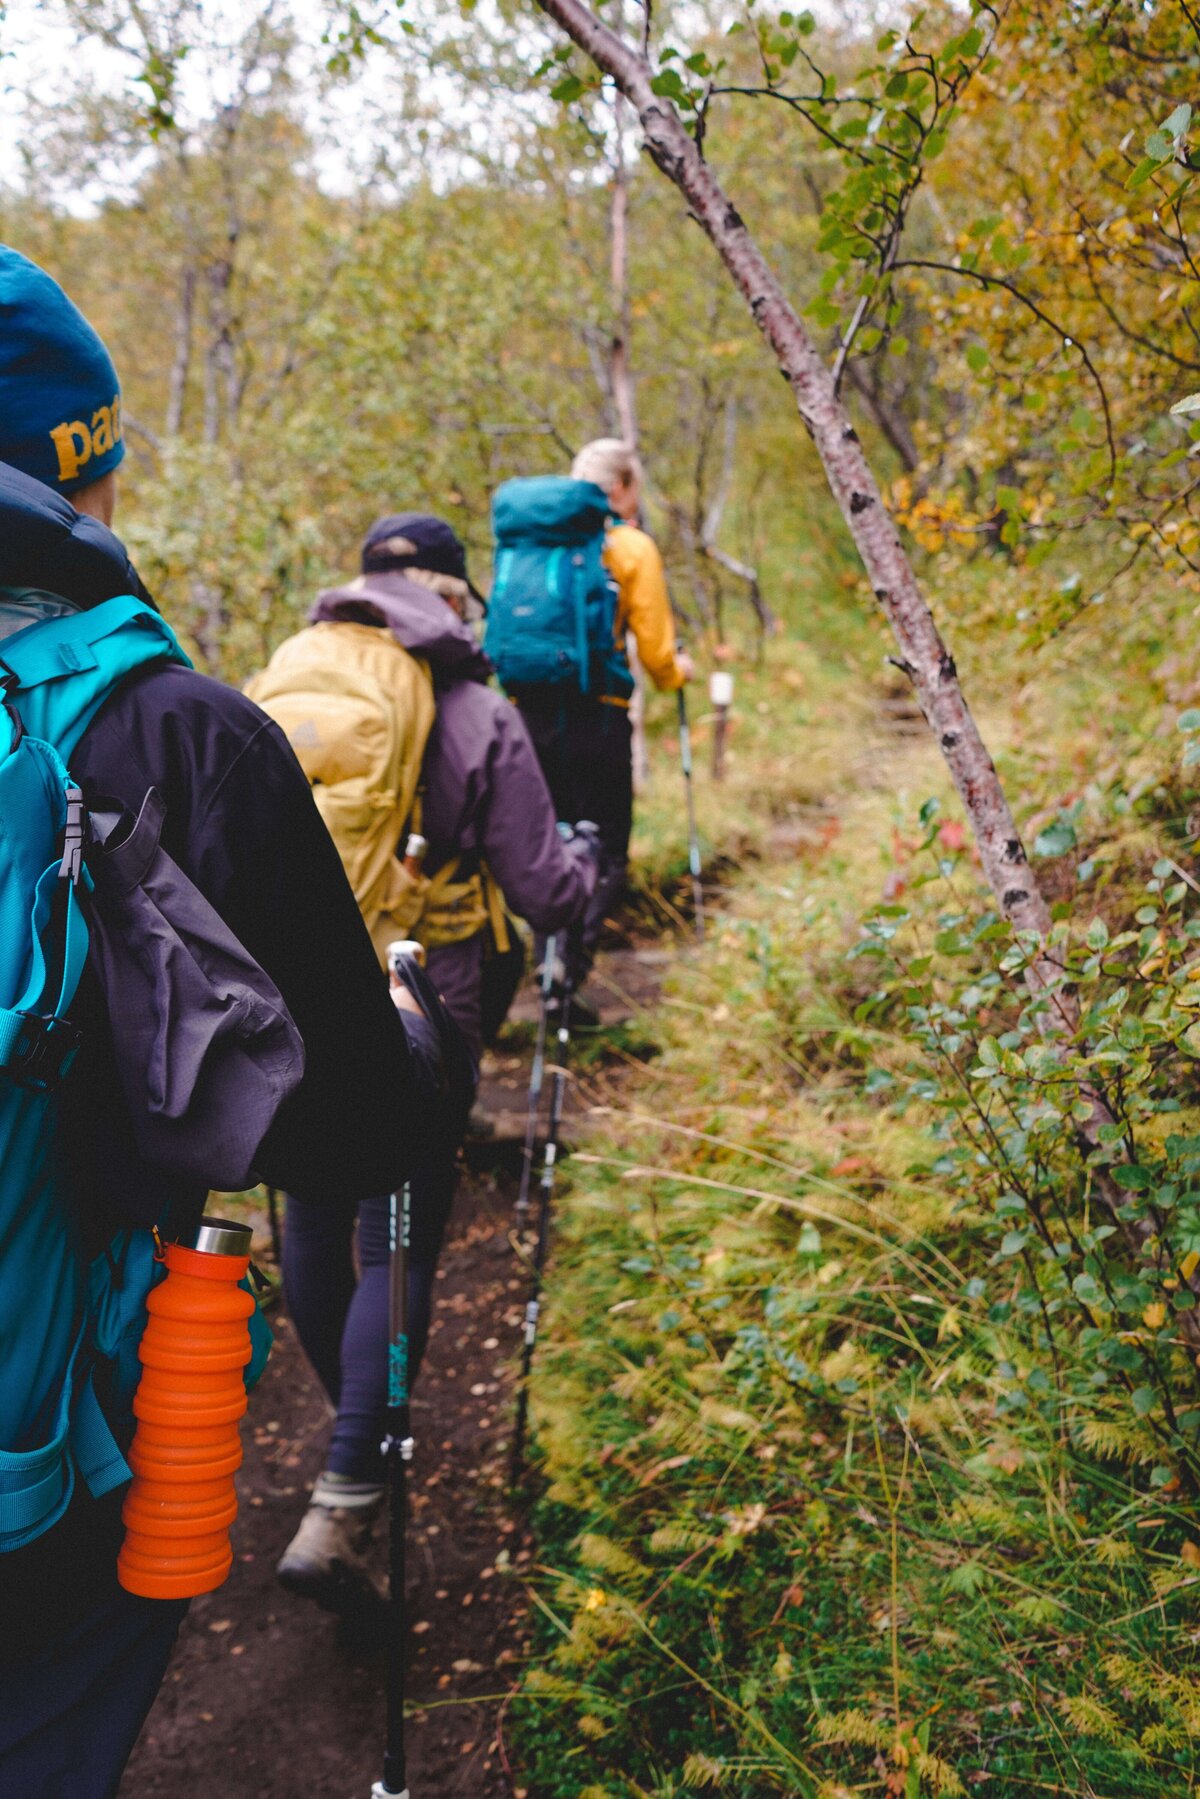 cassouki-Laugavegur-trail-iceland-highlands-trekking-hiking-viking-women-group-trip2